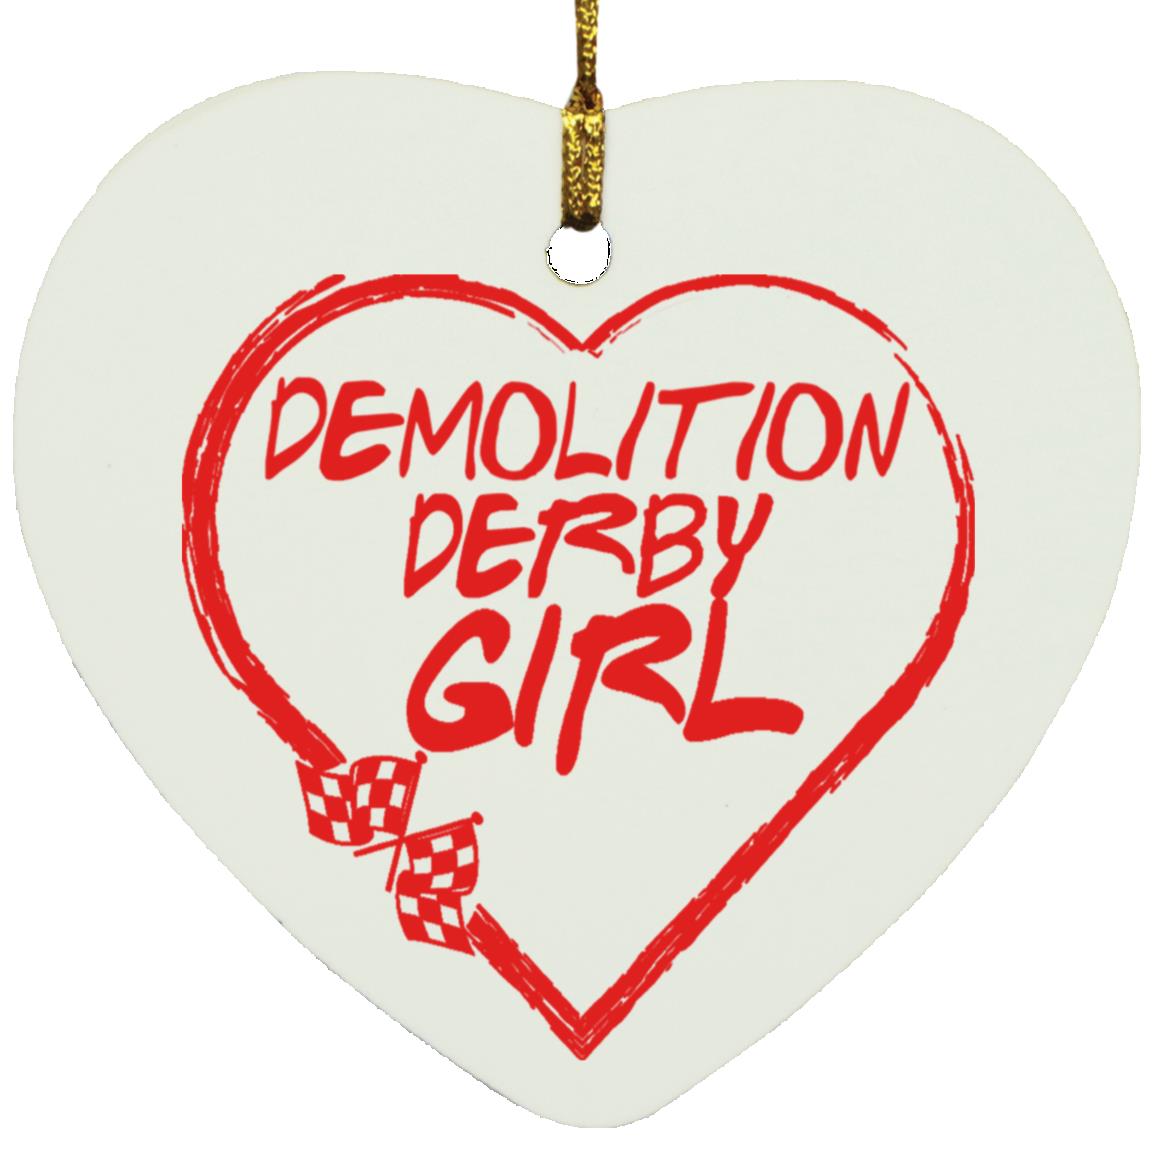 Demolition Derby Girl Heart Ornament